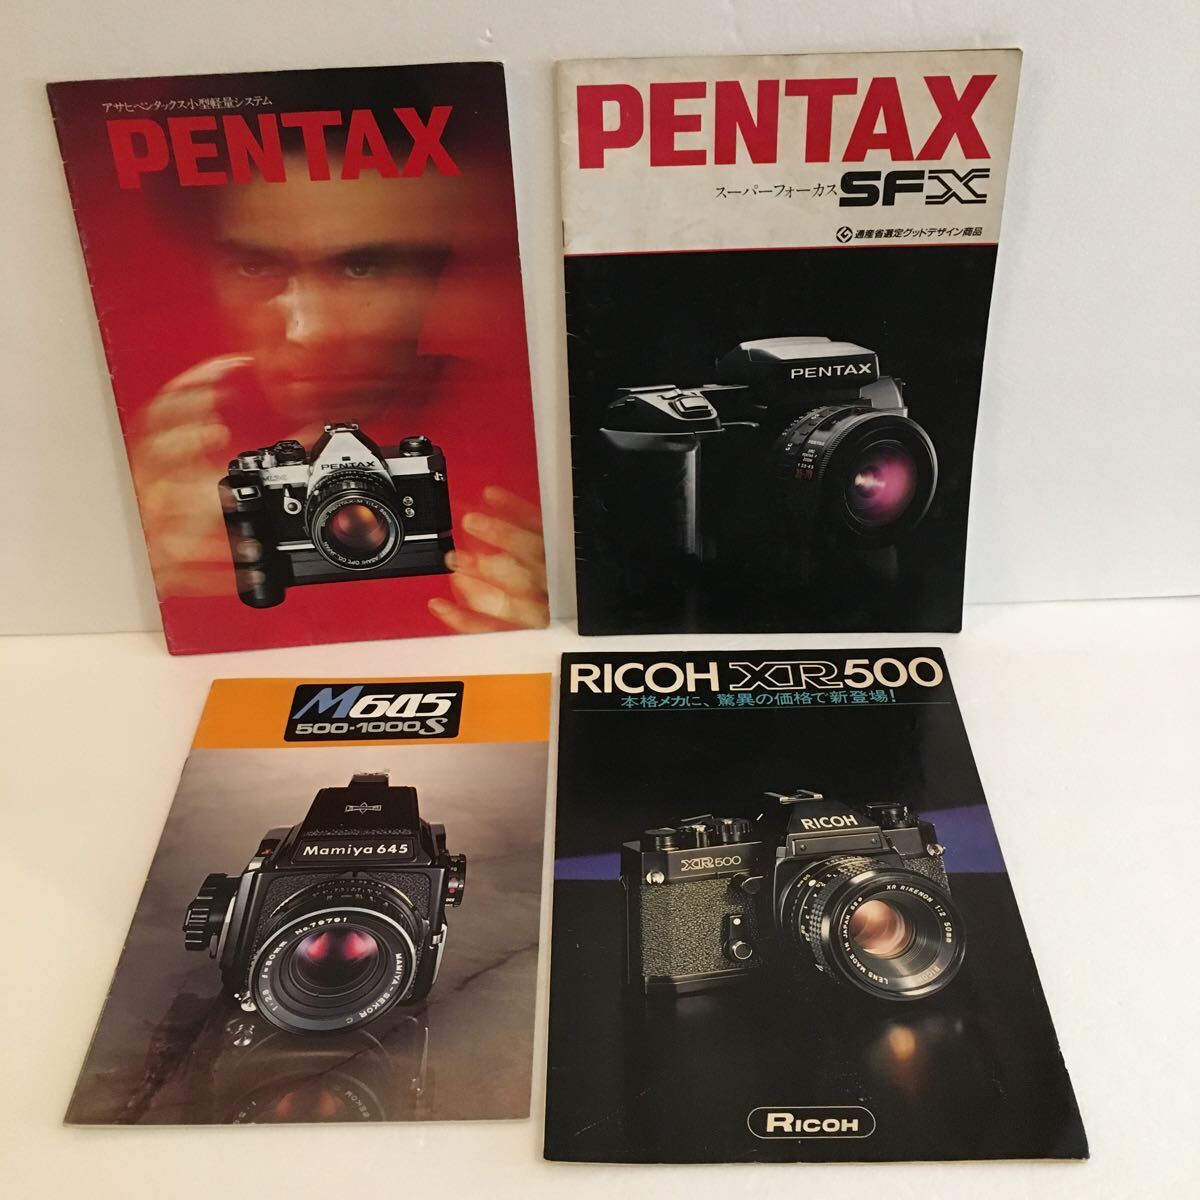  camera catalog 8 point used damage equipped /pentax mx me sfx Ricoh xr500 mamiya m645 etc. retro Vintage Pentax auto110 6×7